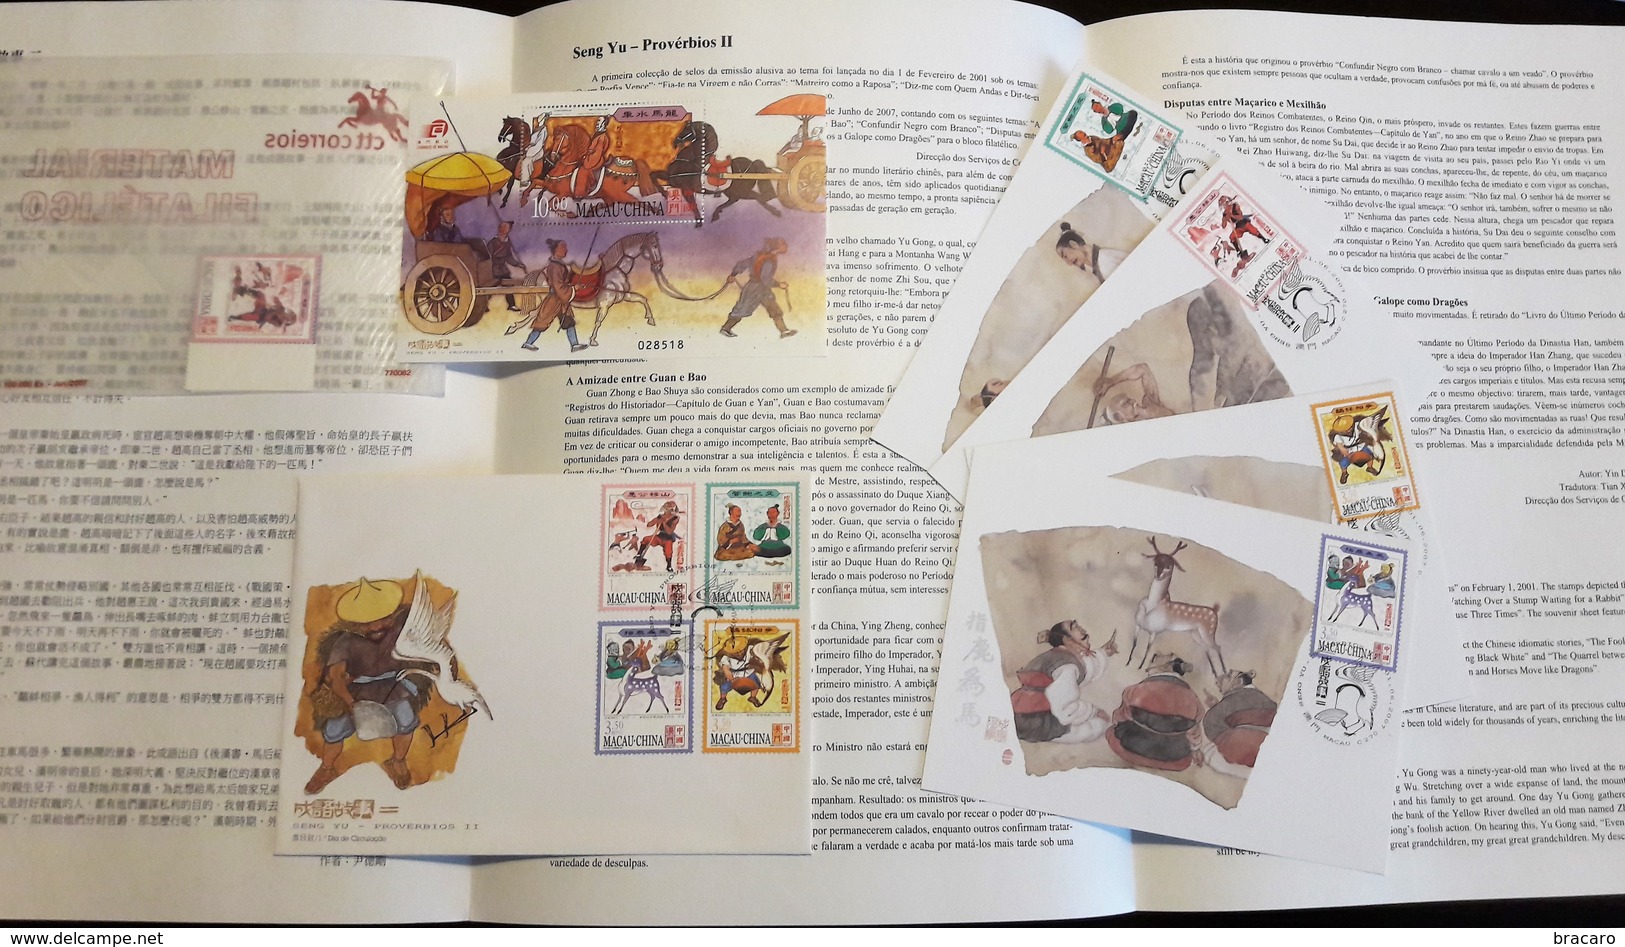 MACAU / MACAO (CHINA) - Seng Yu - Idioms II - 2007 - Stamps (full Set) MNH + Block MNH + FDC + 4 Maximum Cards + Leaflet - Collections, Lots & Series